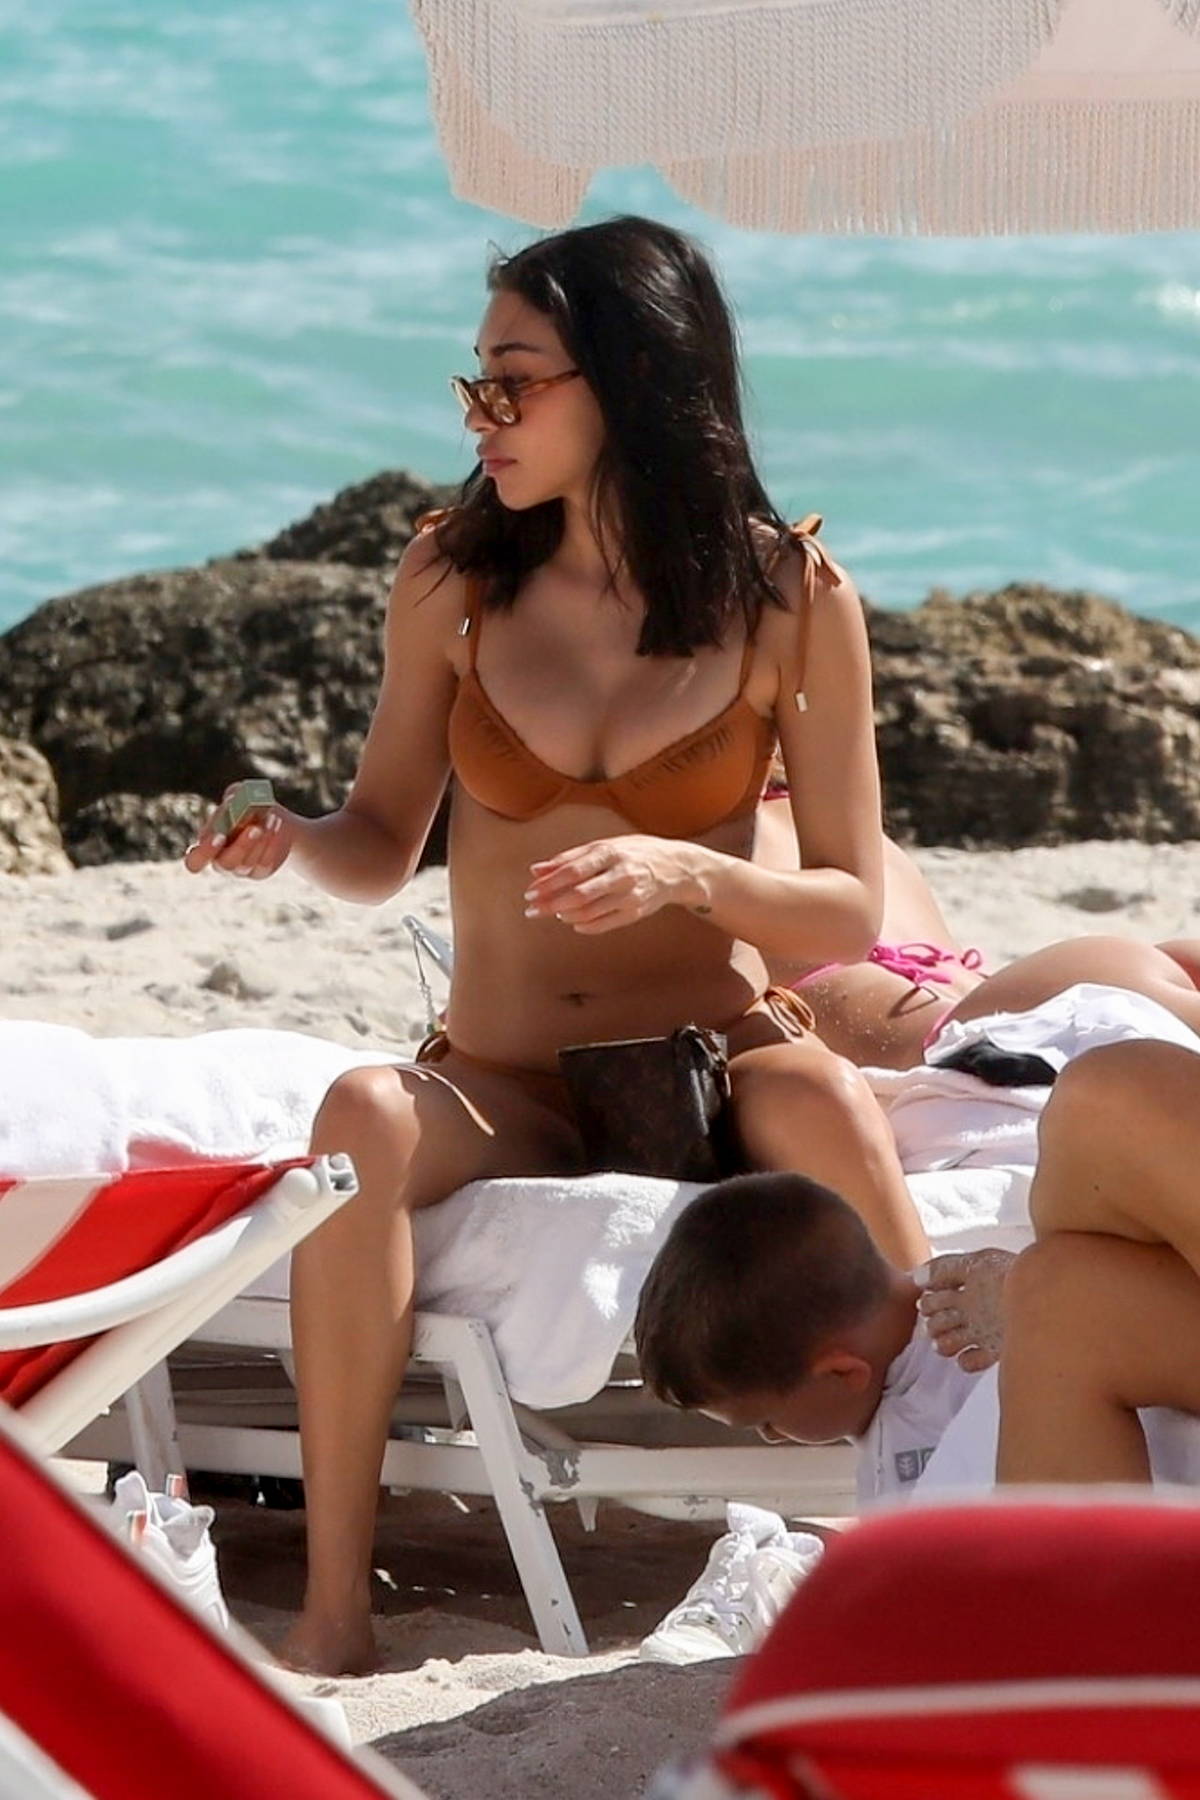 Chantel Jeffries rocks a patterned Louis Vuitton bikini while enjoying a  beach day with friends in